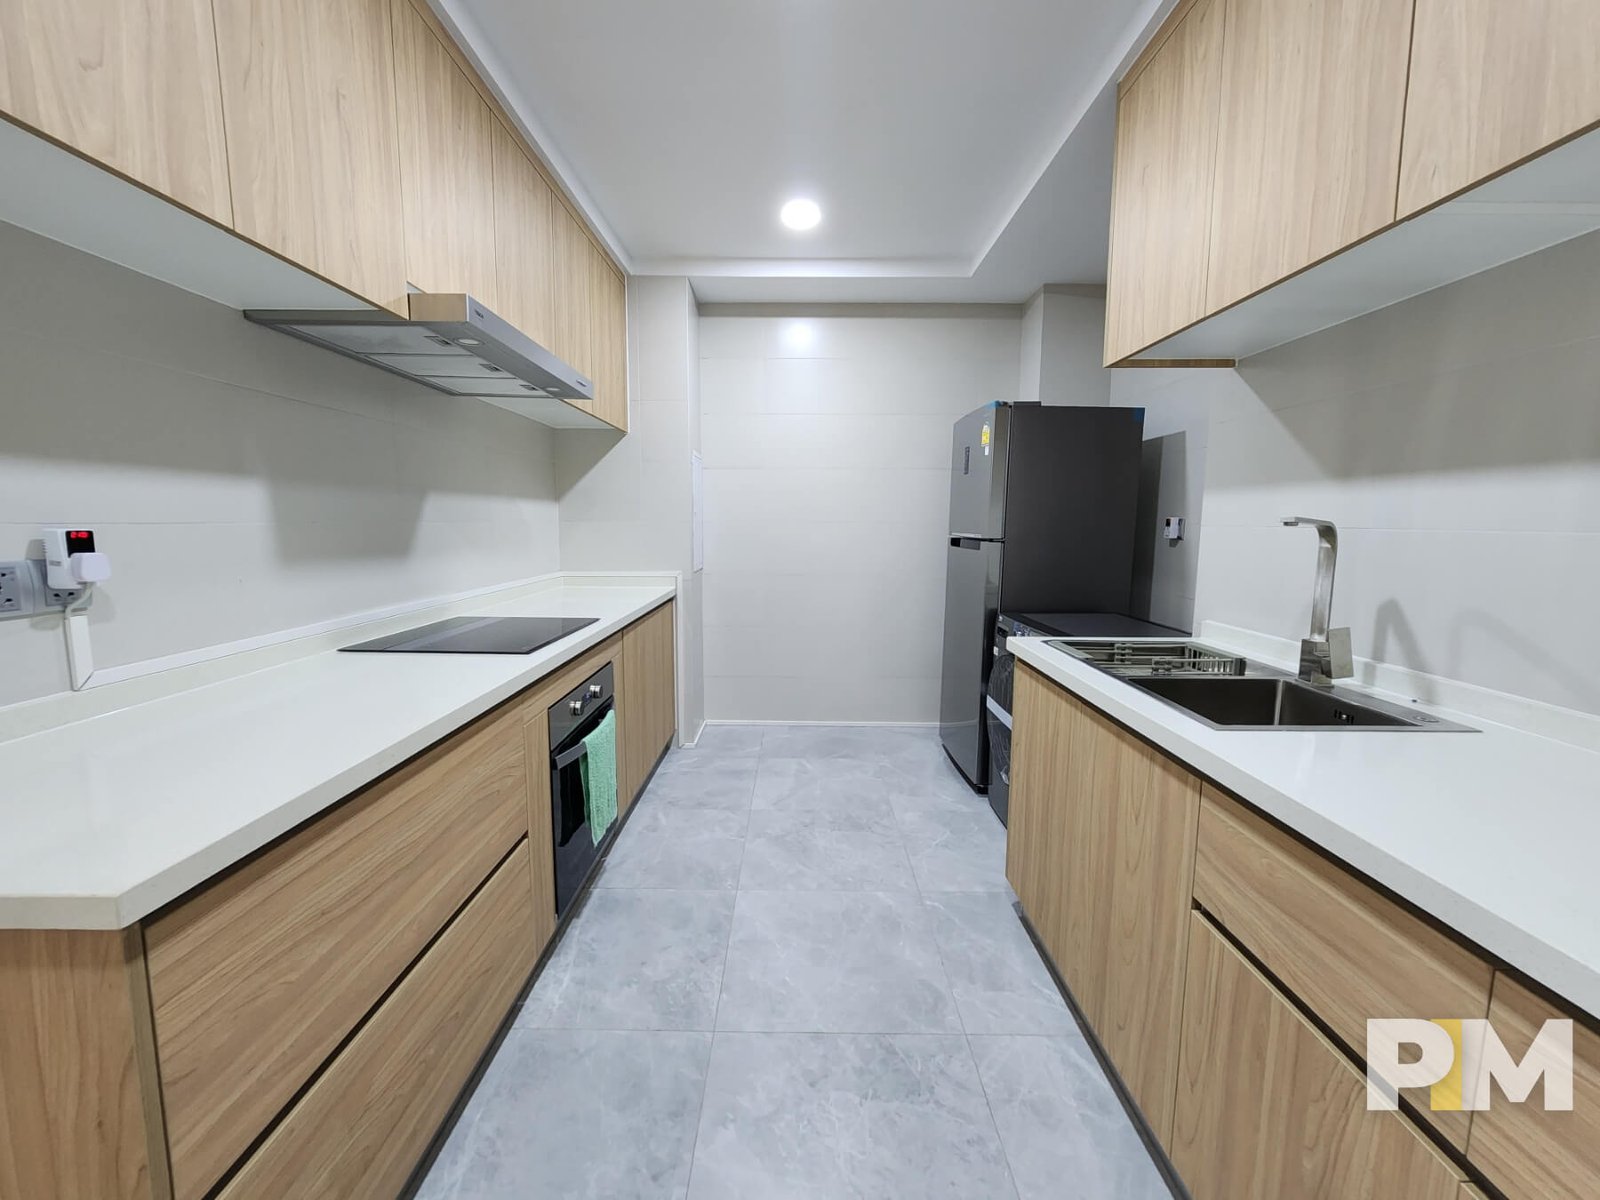 Kitchen room - Myanmar Real Estate